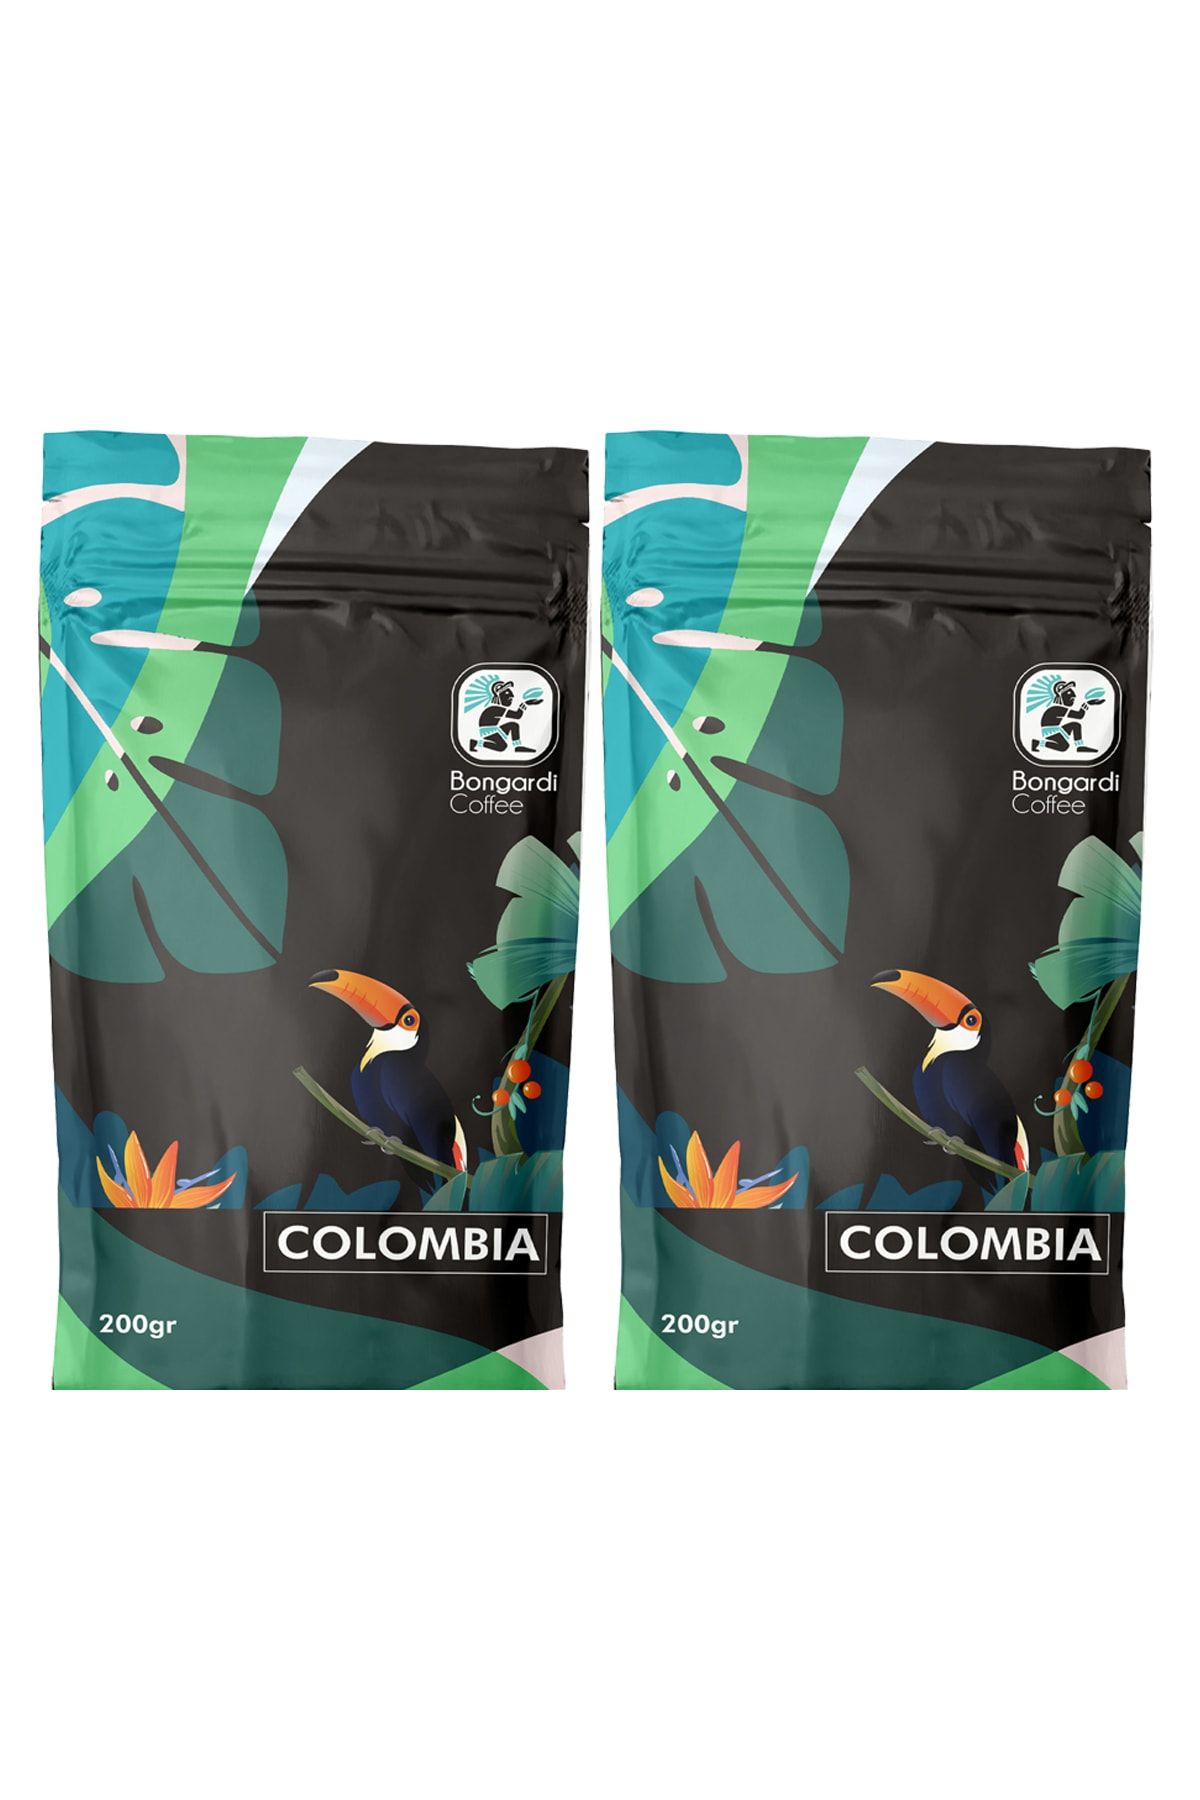 Bongardi Coffee 2x200 gram Colombia Yöresel Filtre Kahve Makinesi Uyumlu Kolombiya